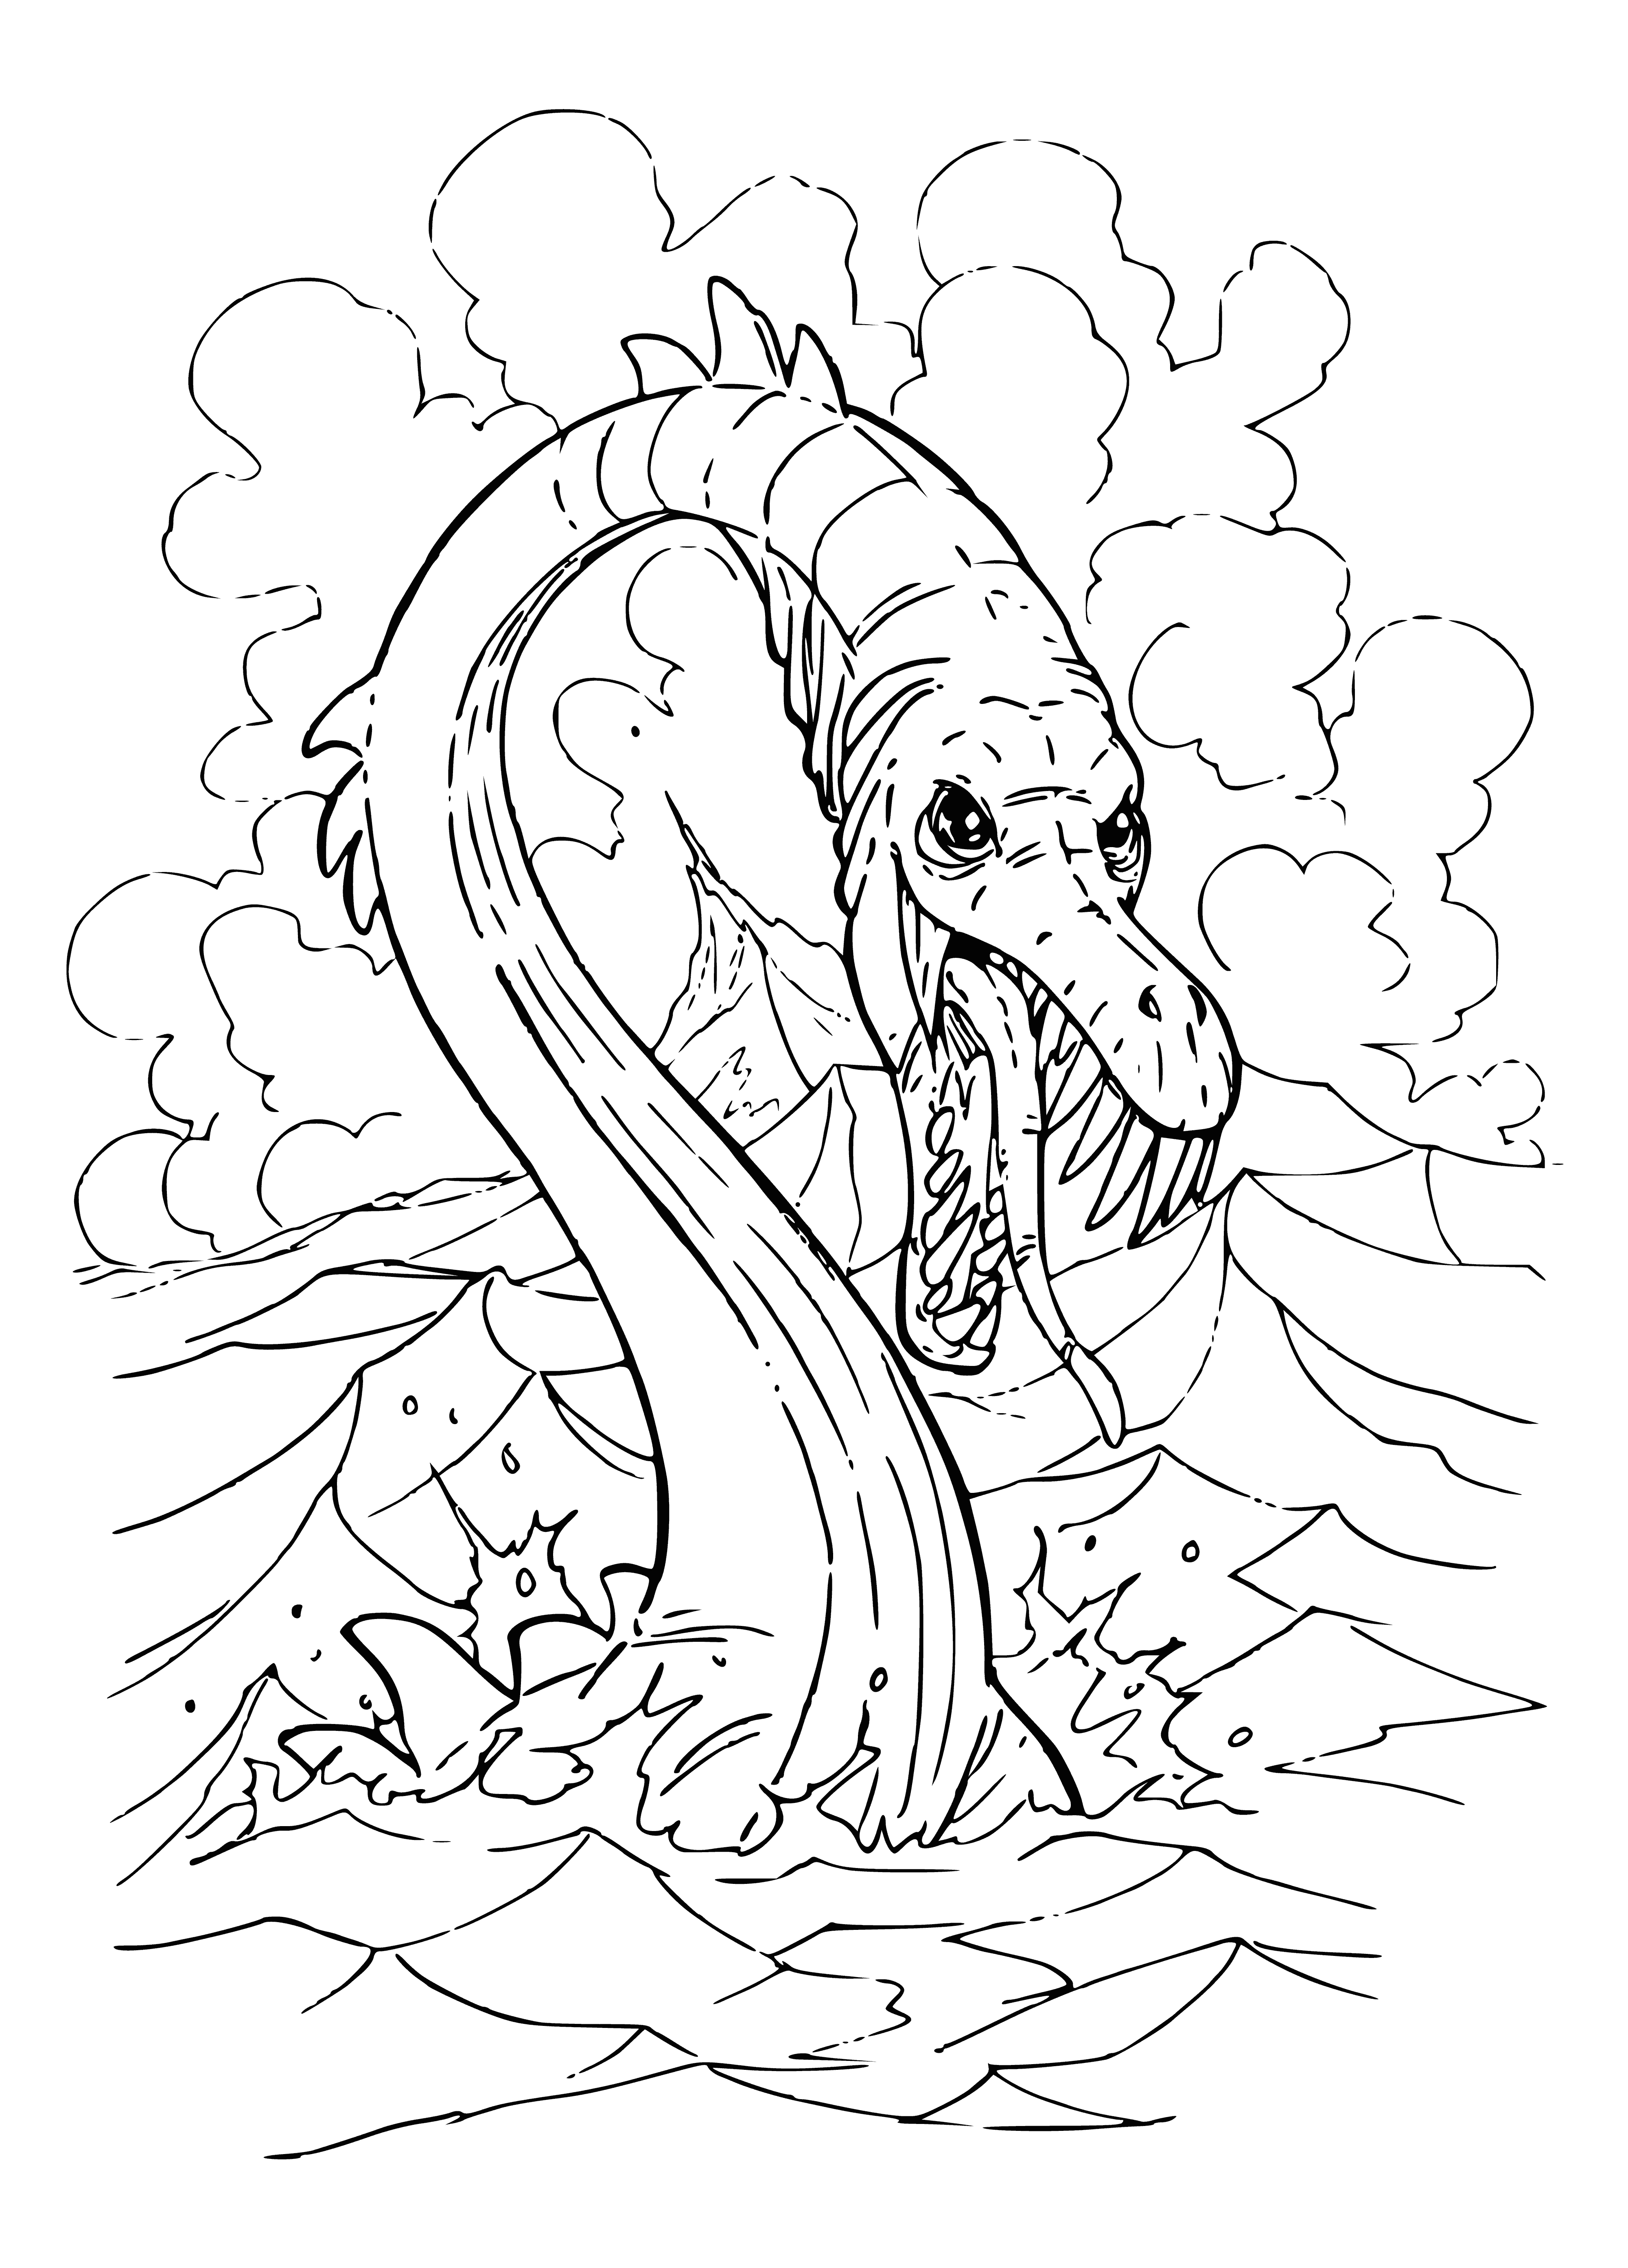 Sea serpent coloring page